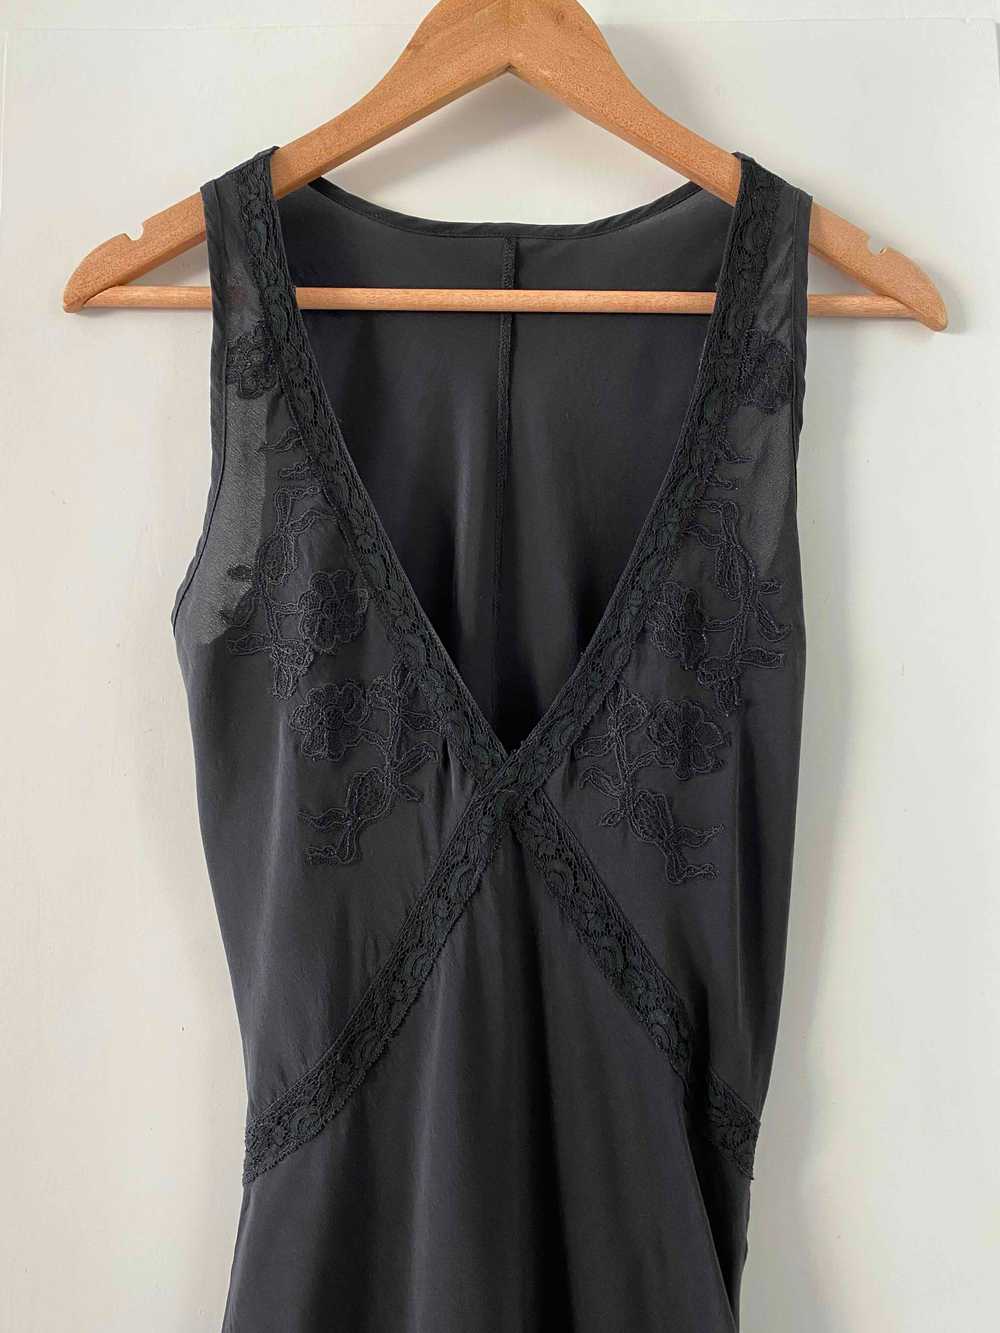 Silk slip dress - Silk slip dress, 100% black sil… - image 9